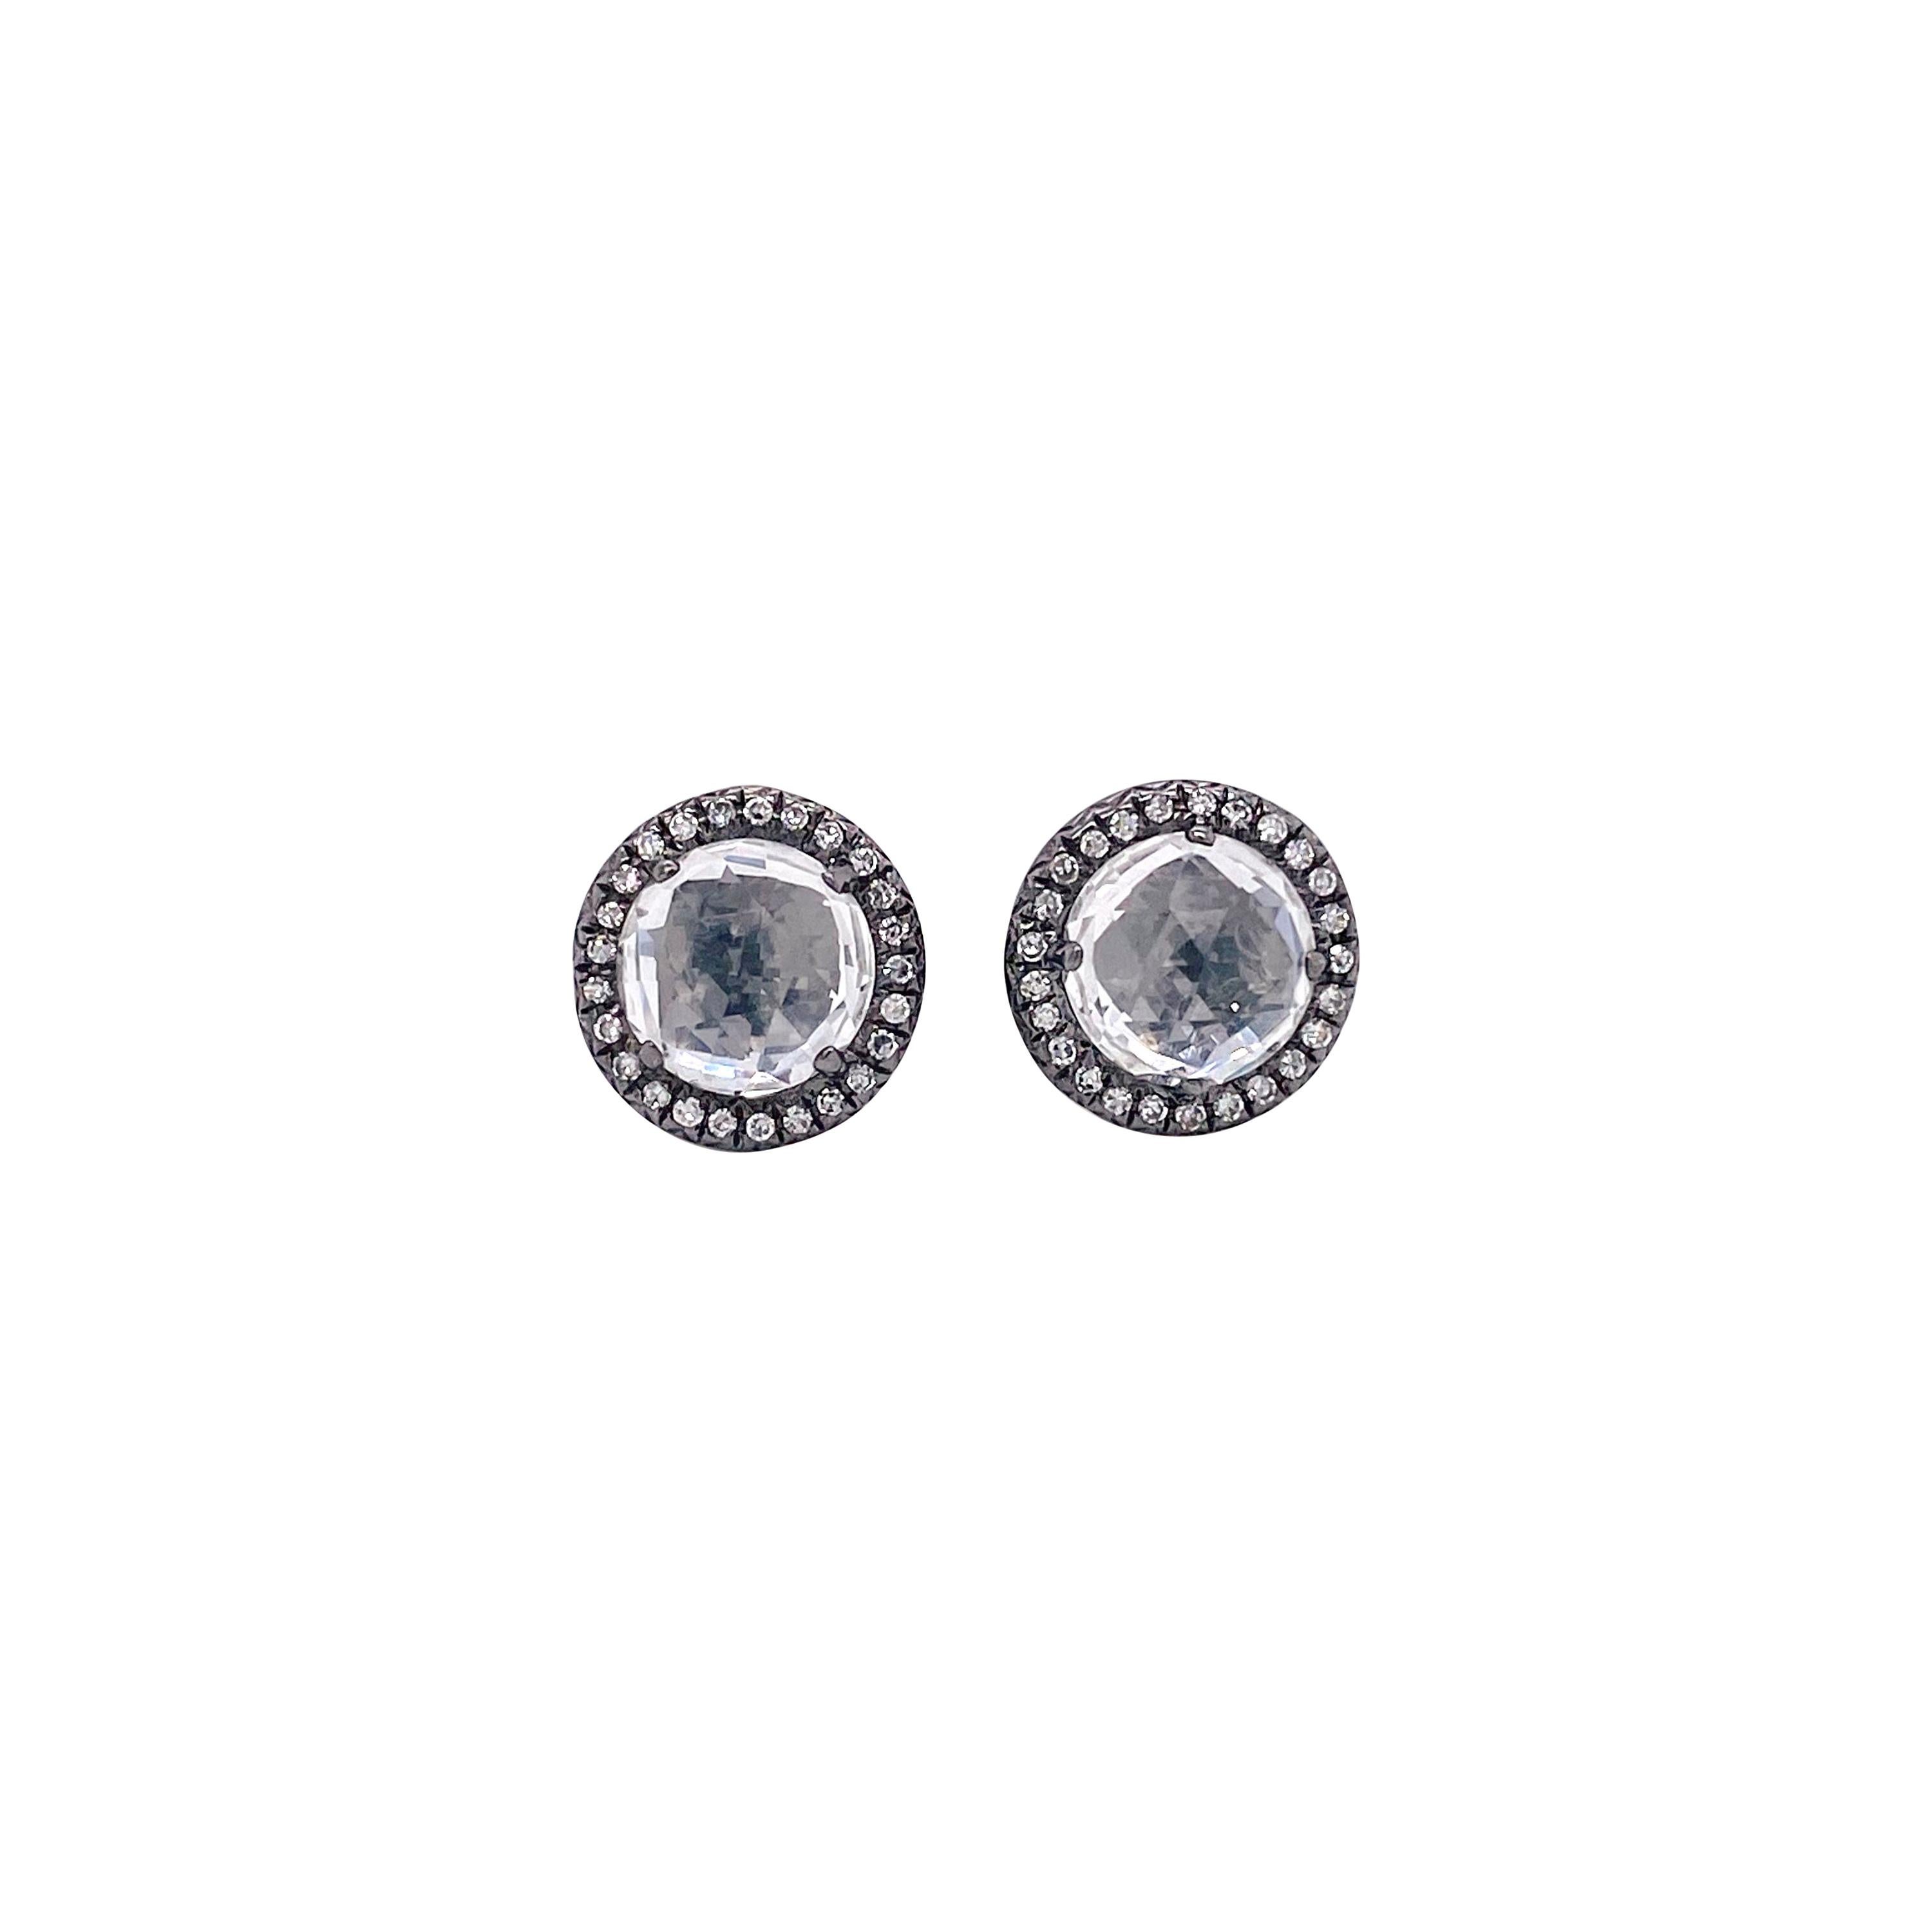 Topaz Diamond Studs Earrings, Halo of Diamonds, 2.50 Carat White Topaz, Black For Sale